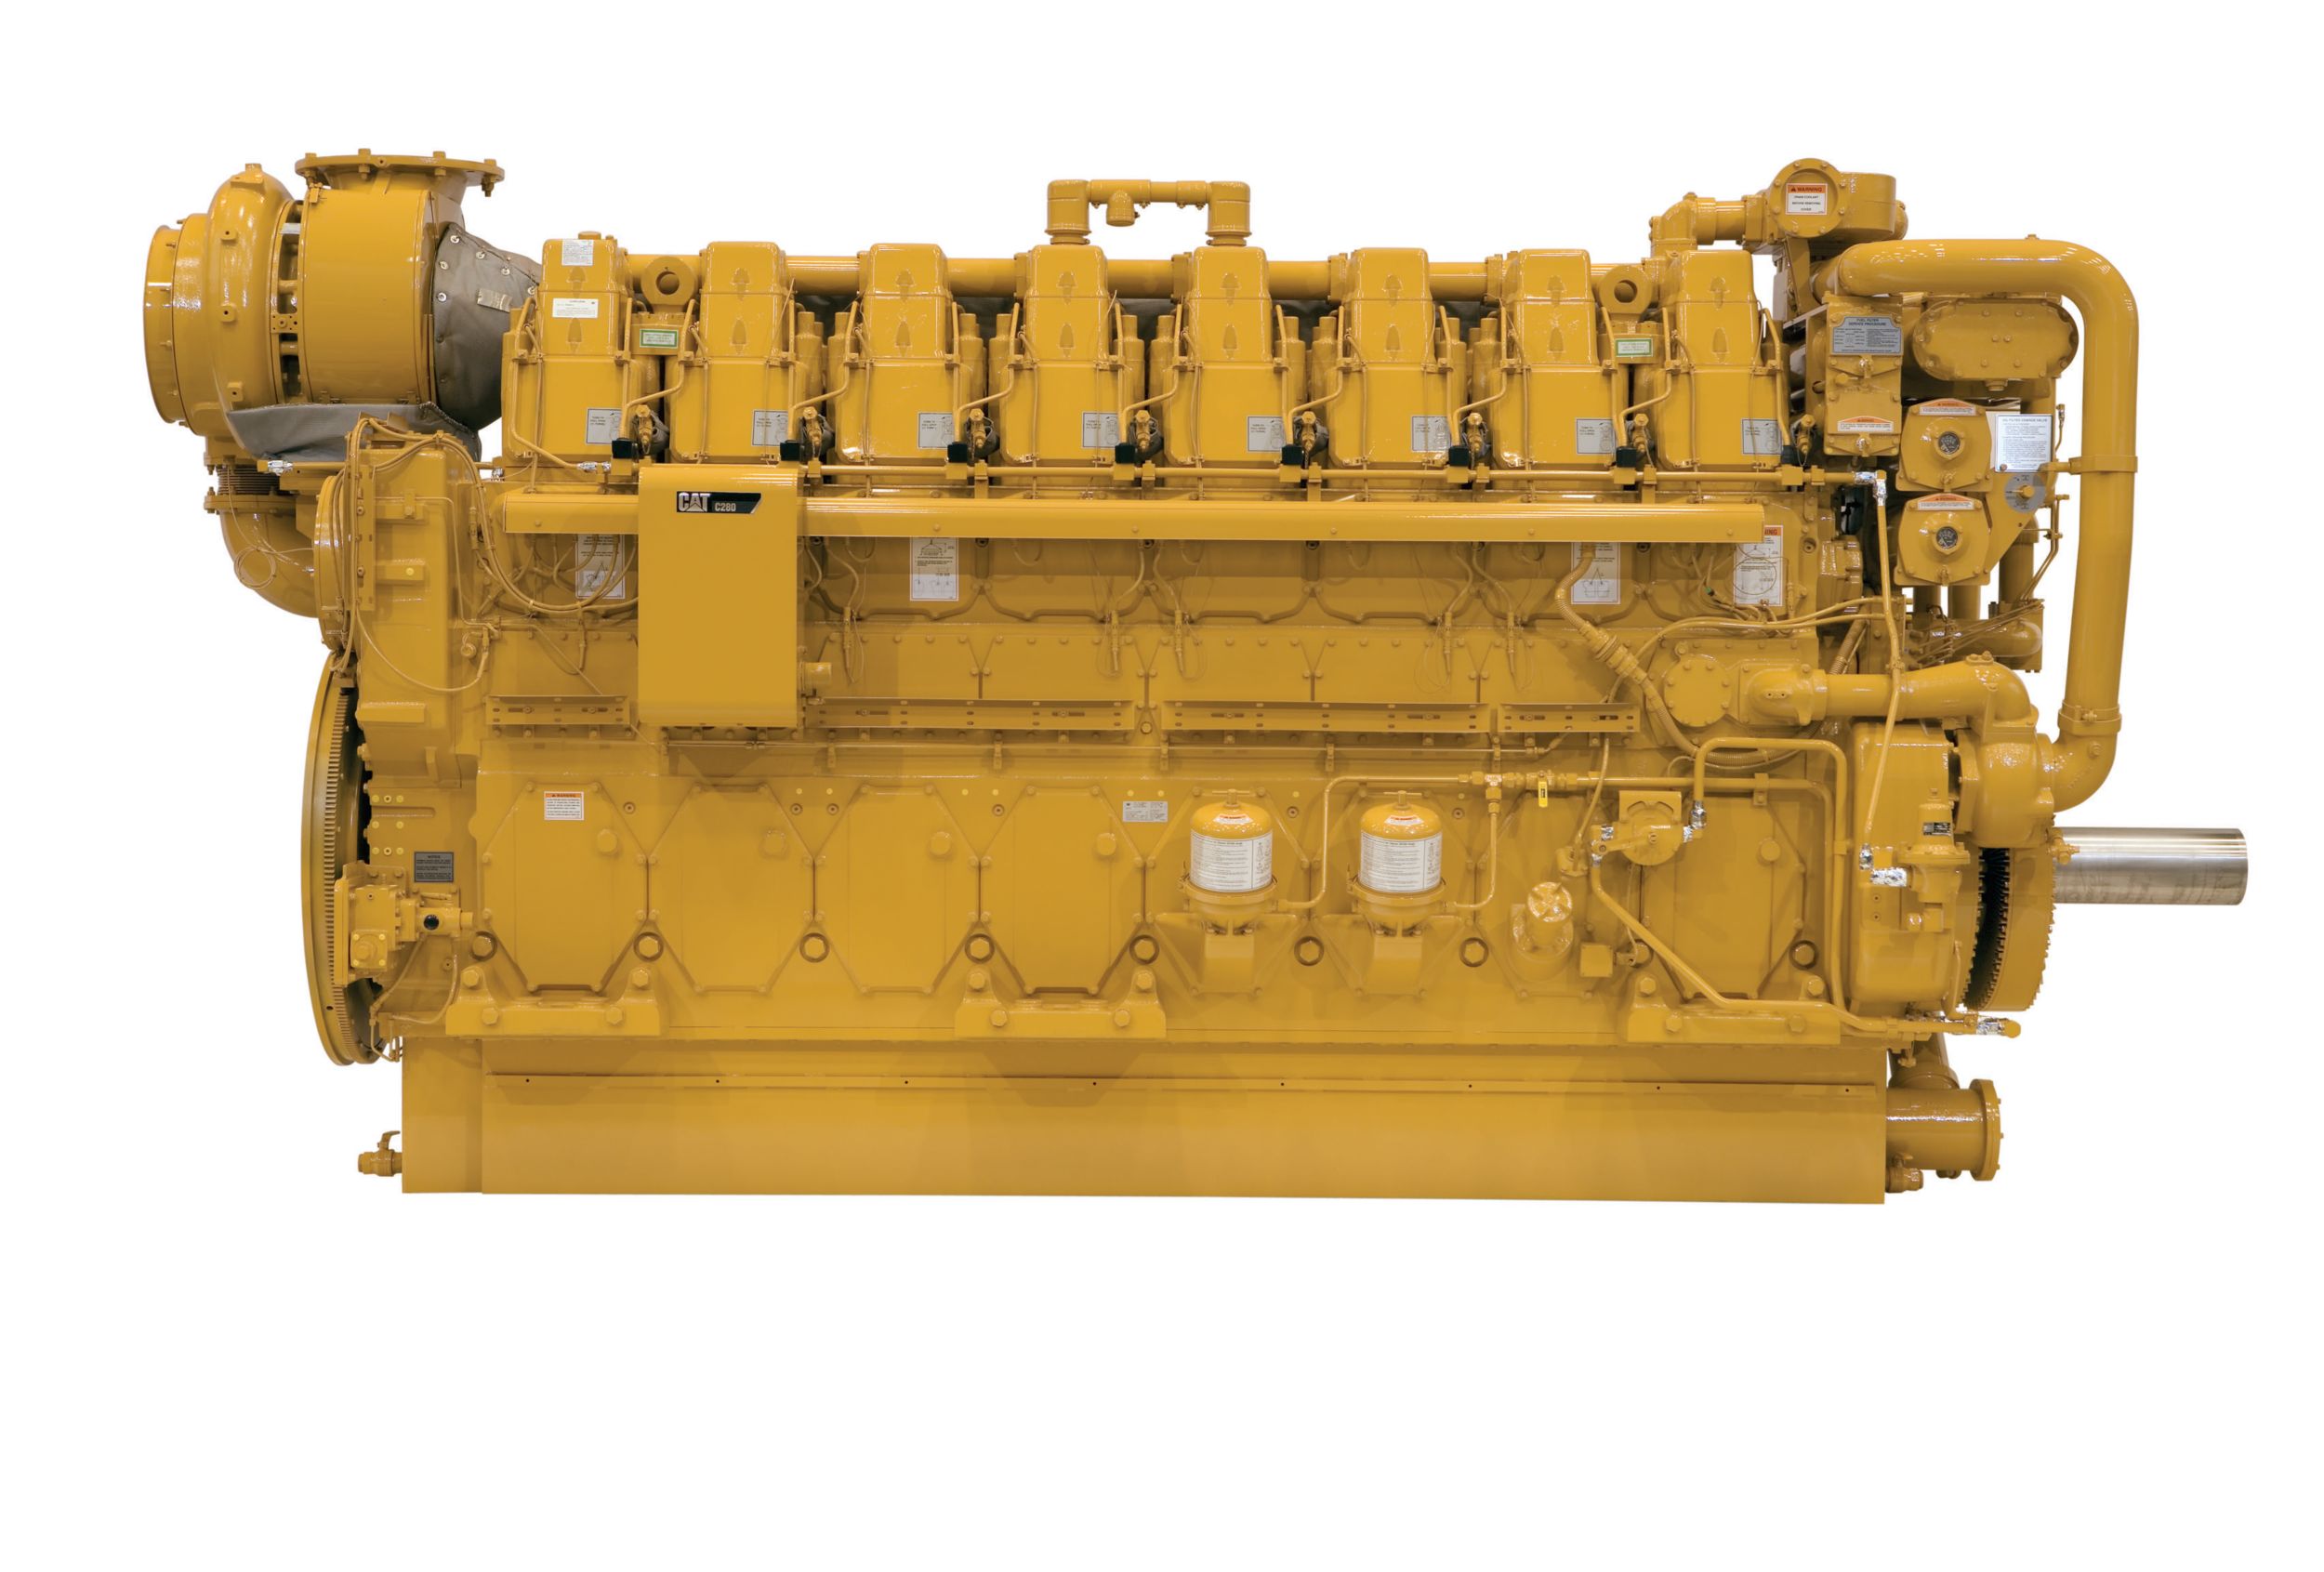 C280-8 Marine Propulsion Engine (U.S. EPA Tier 4)